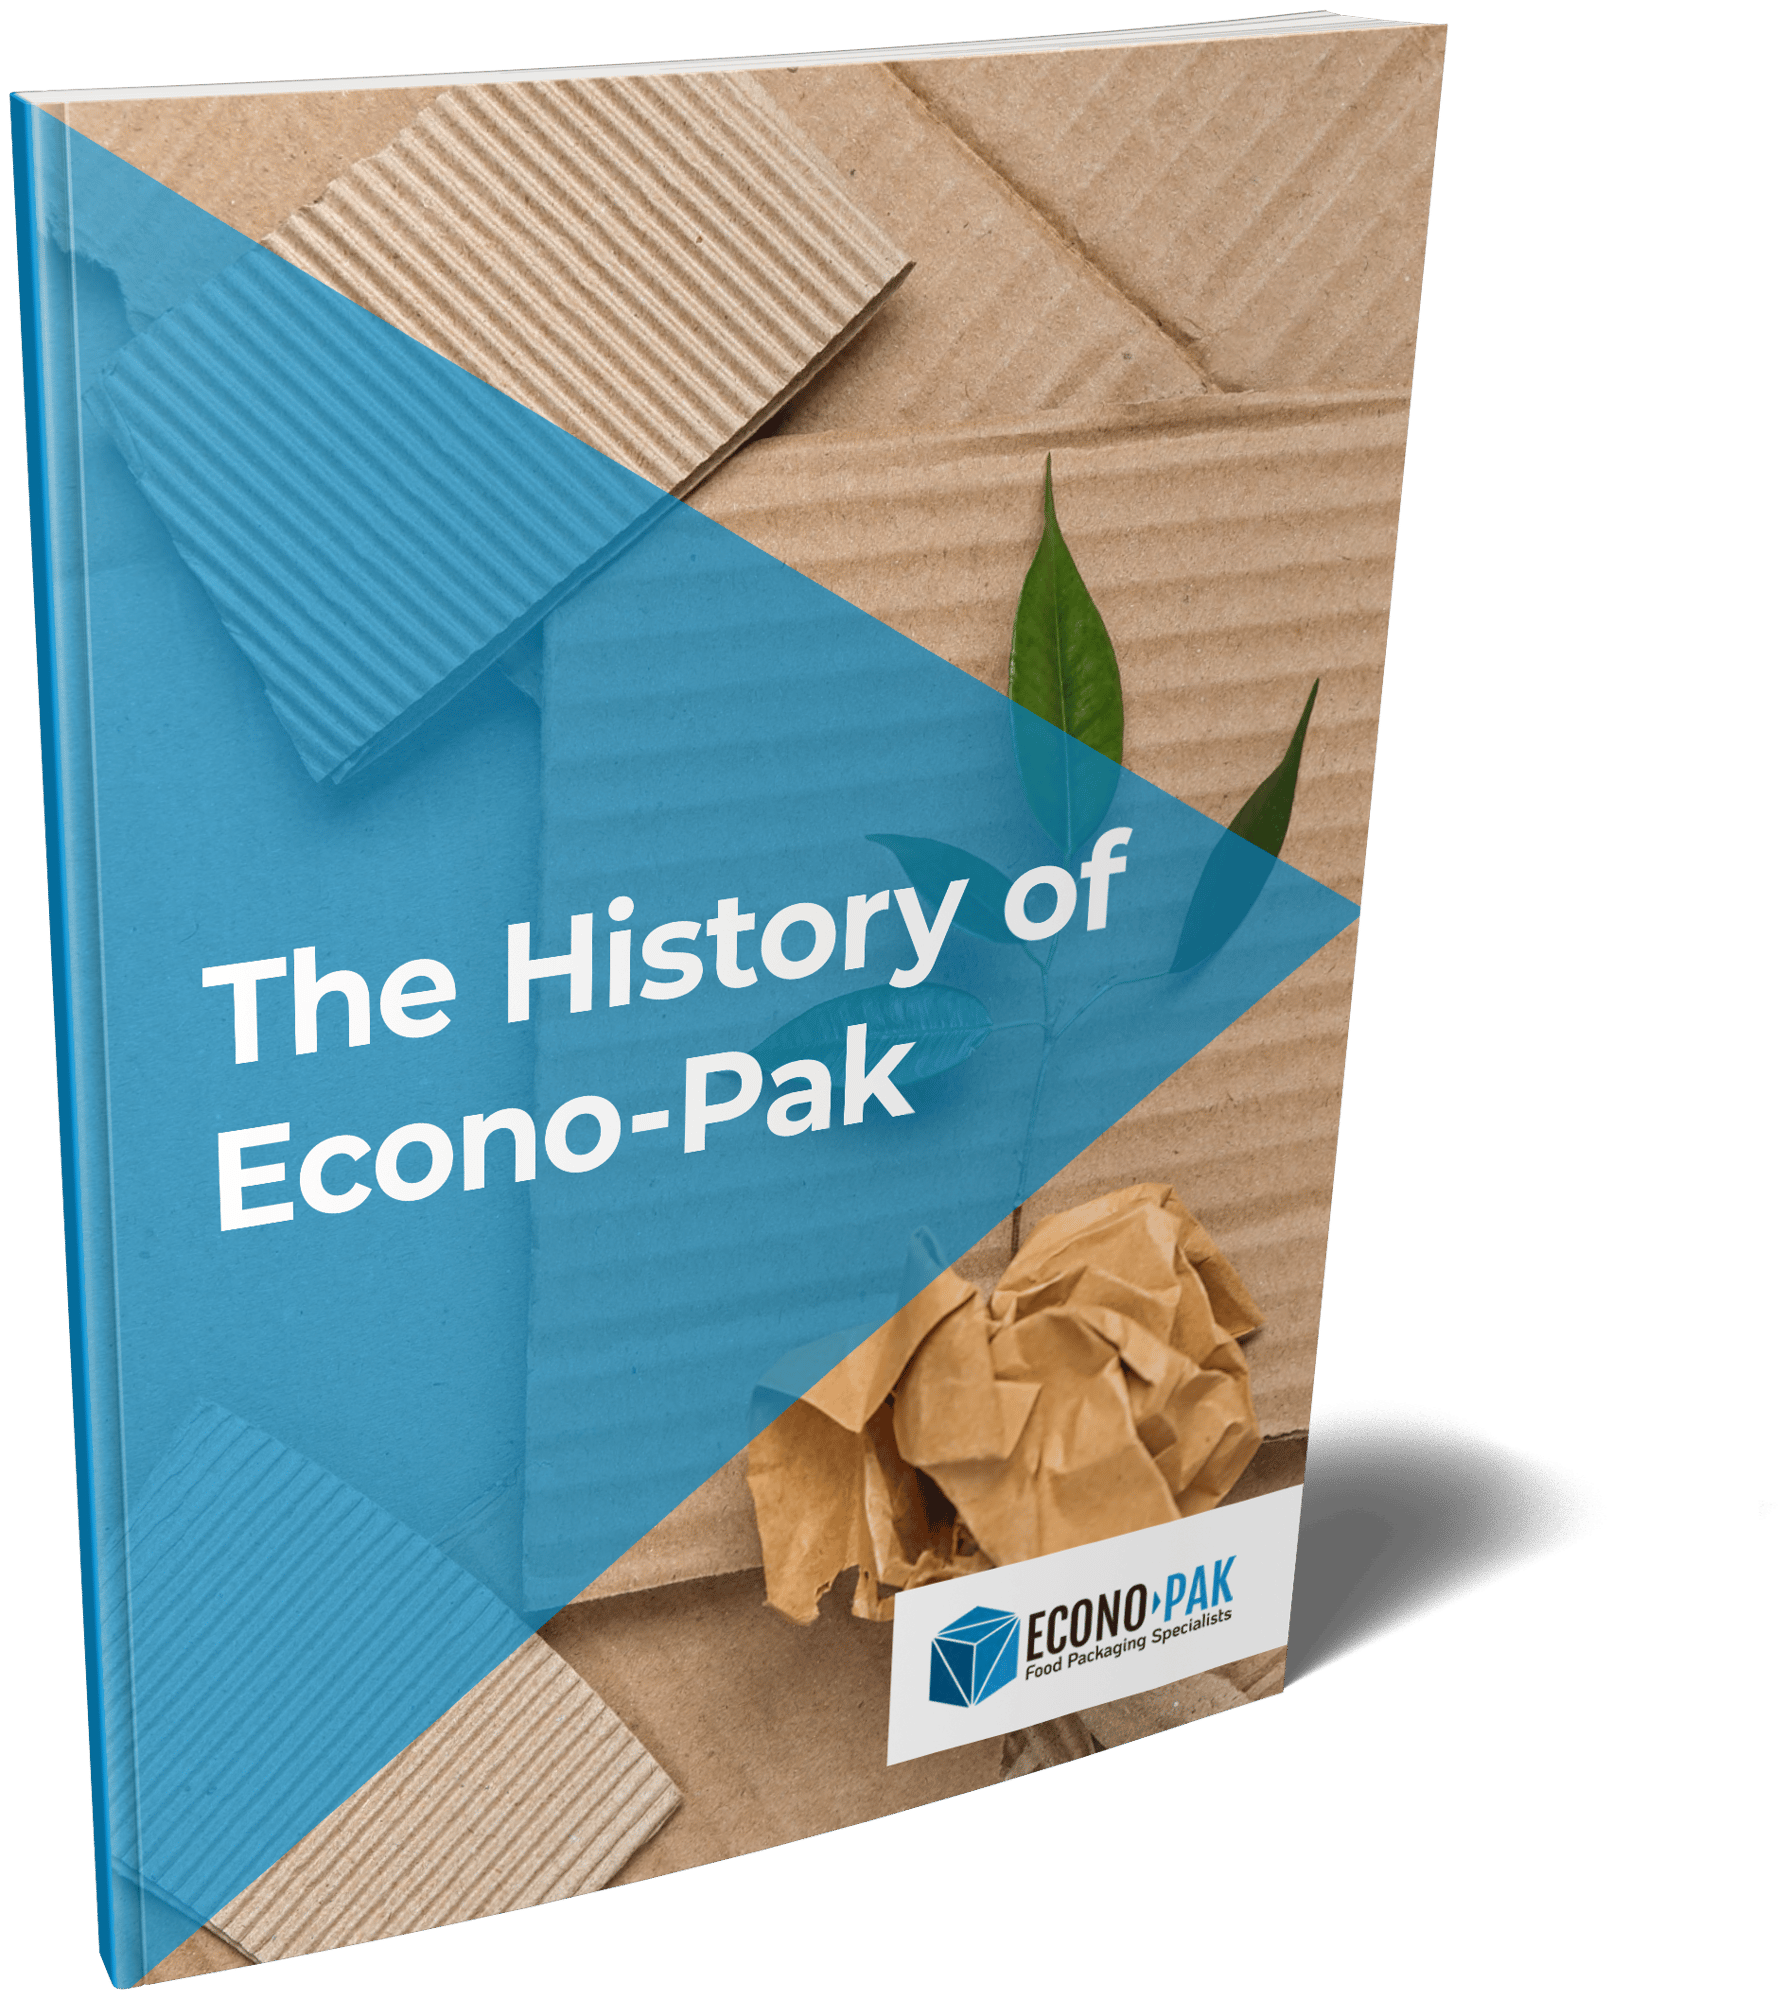 The History of Econo-Pak